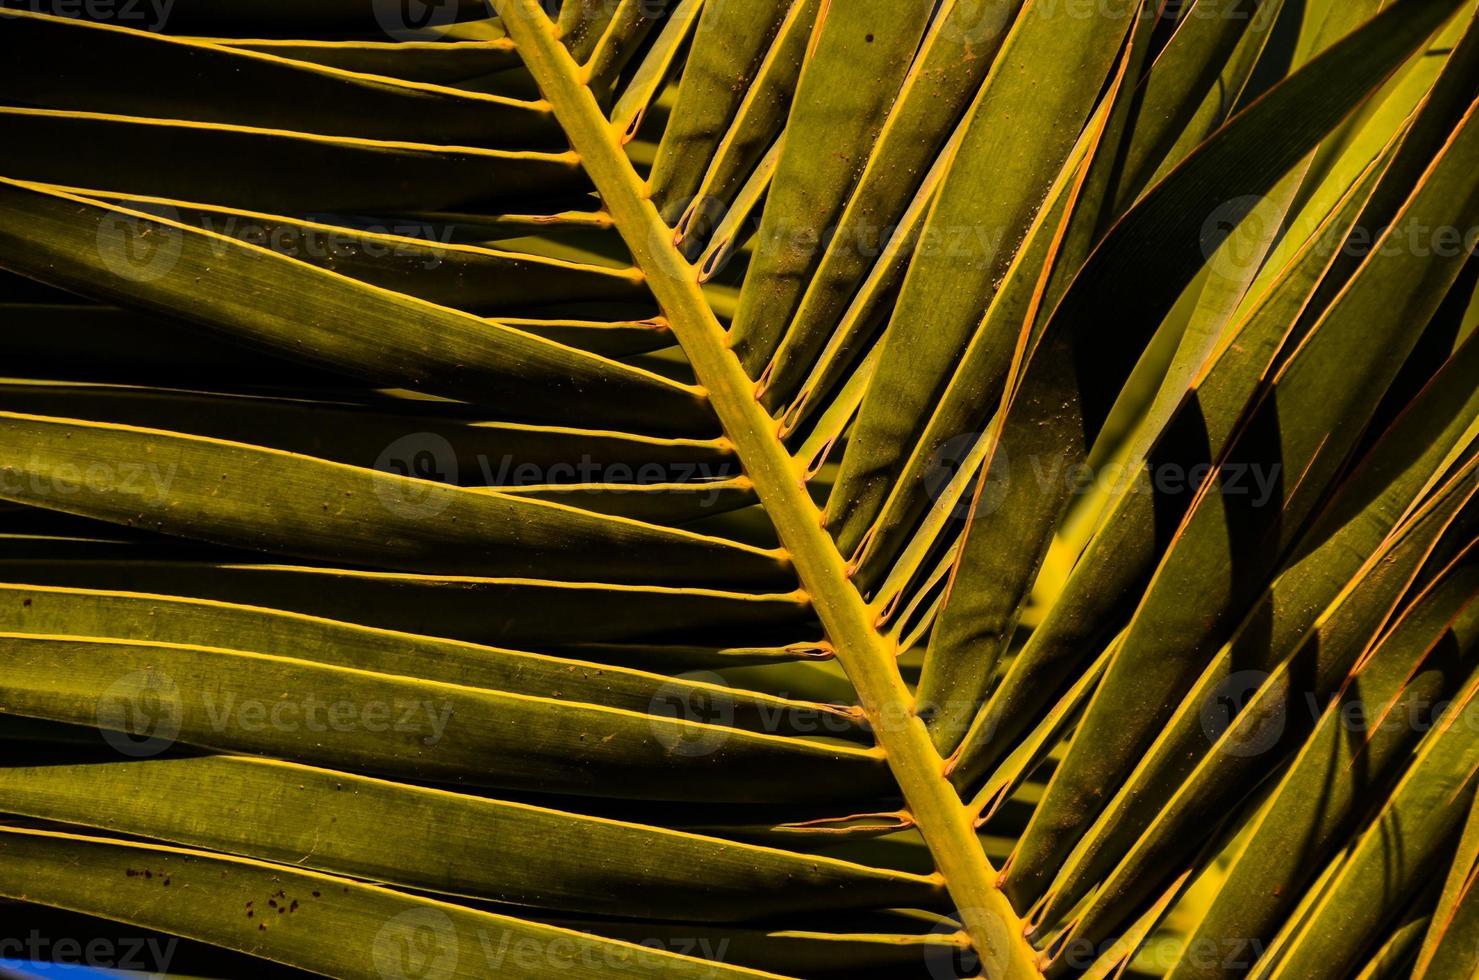 Palm leaf close up photo